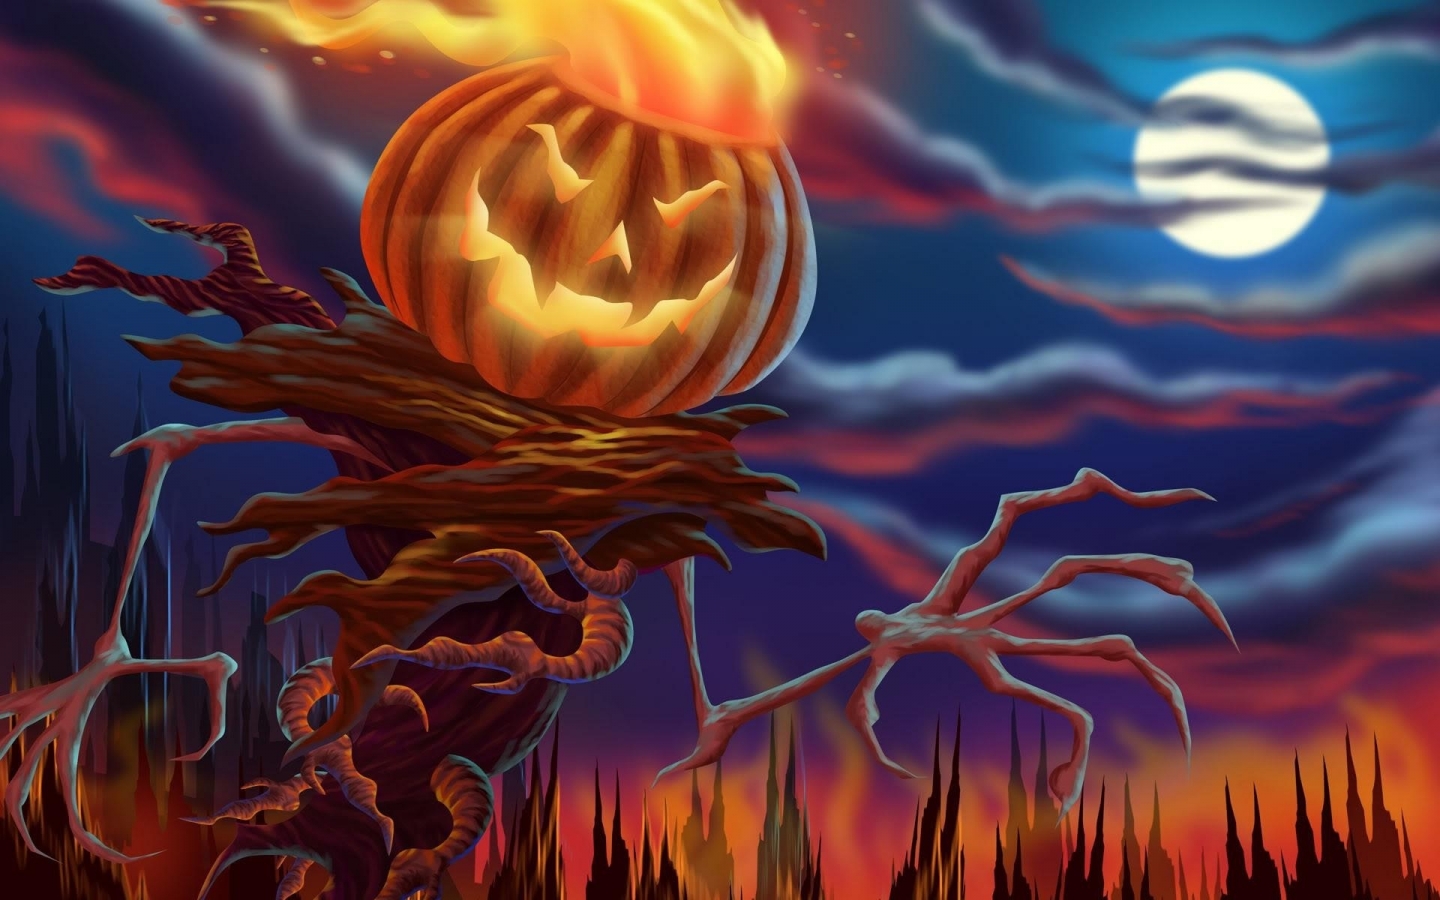 Halloween Digital Illustration for 1440 x 900 widescreen resolution